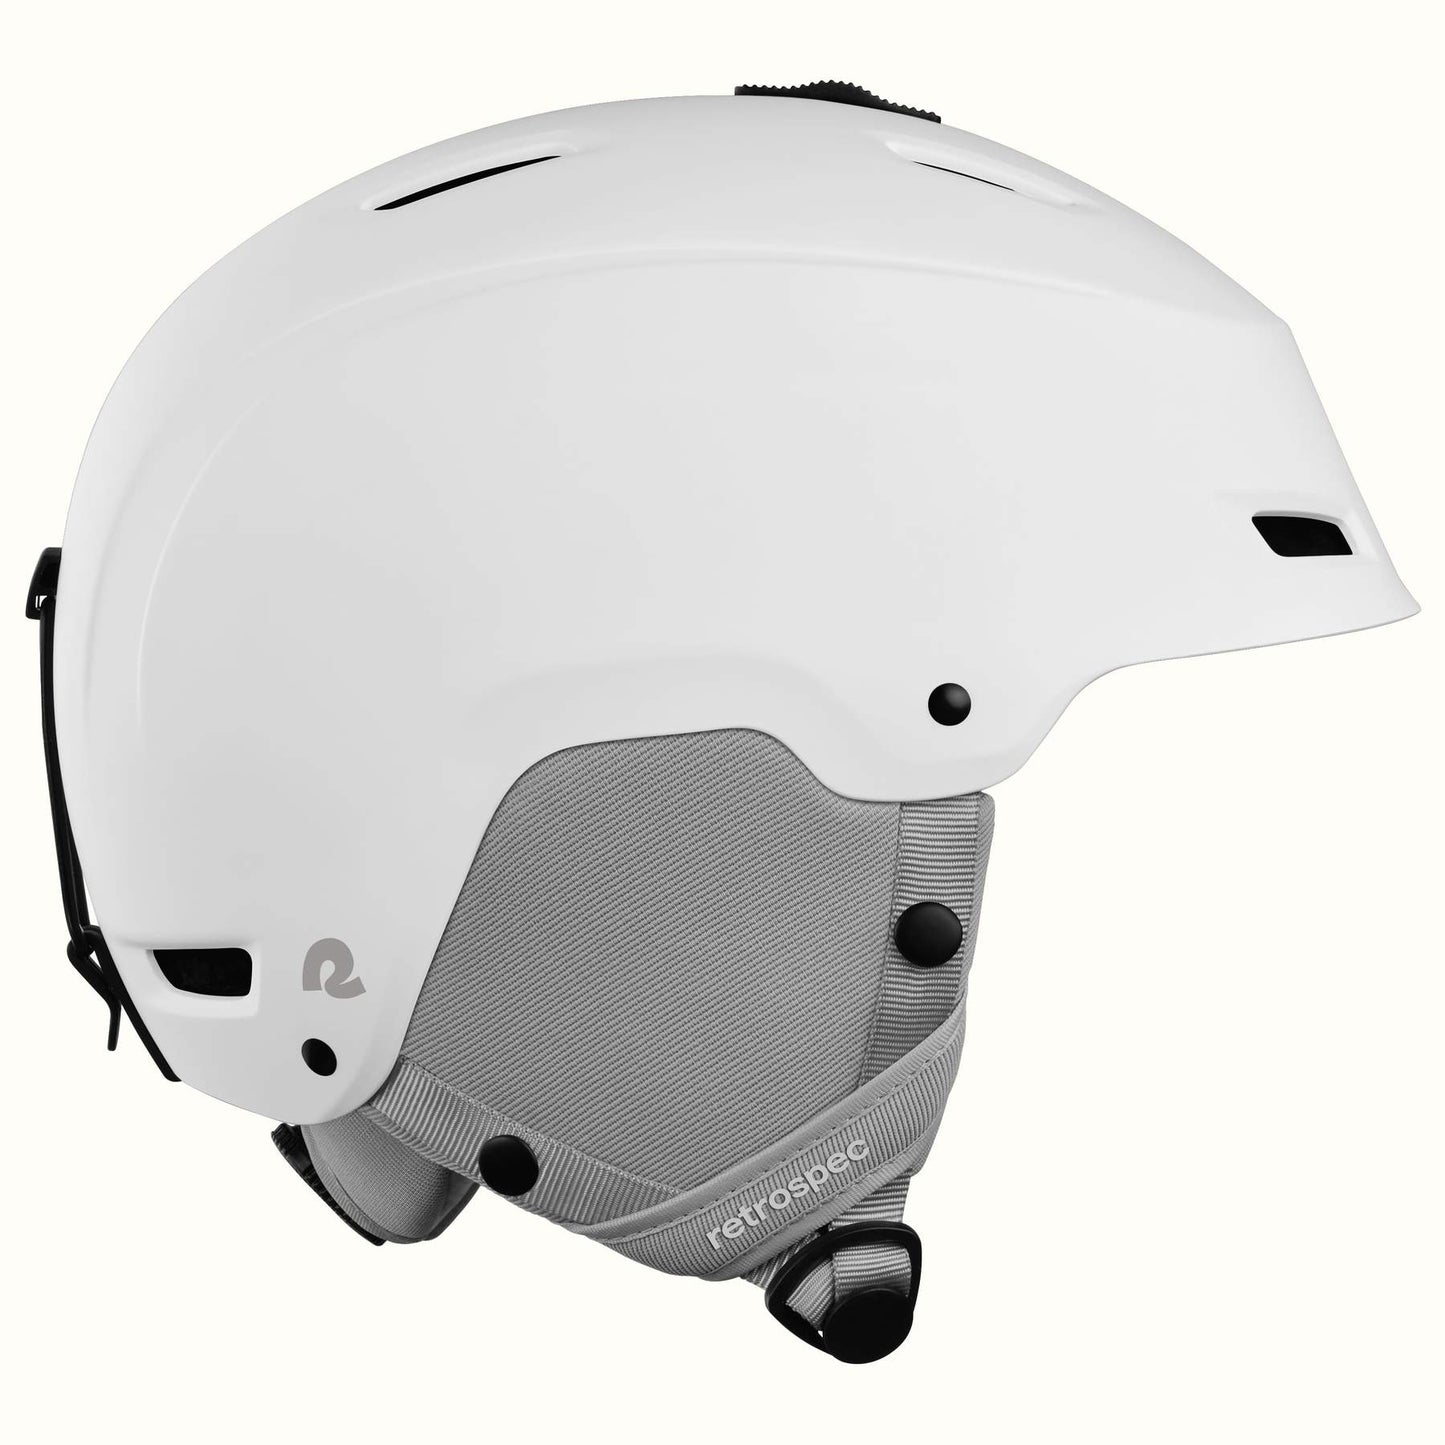 Retrospec Zephyr Snowboard Ski Helmet Various sizes and colors, NEW